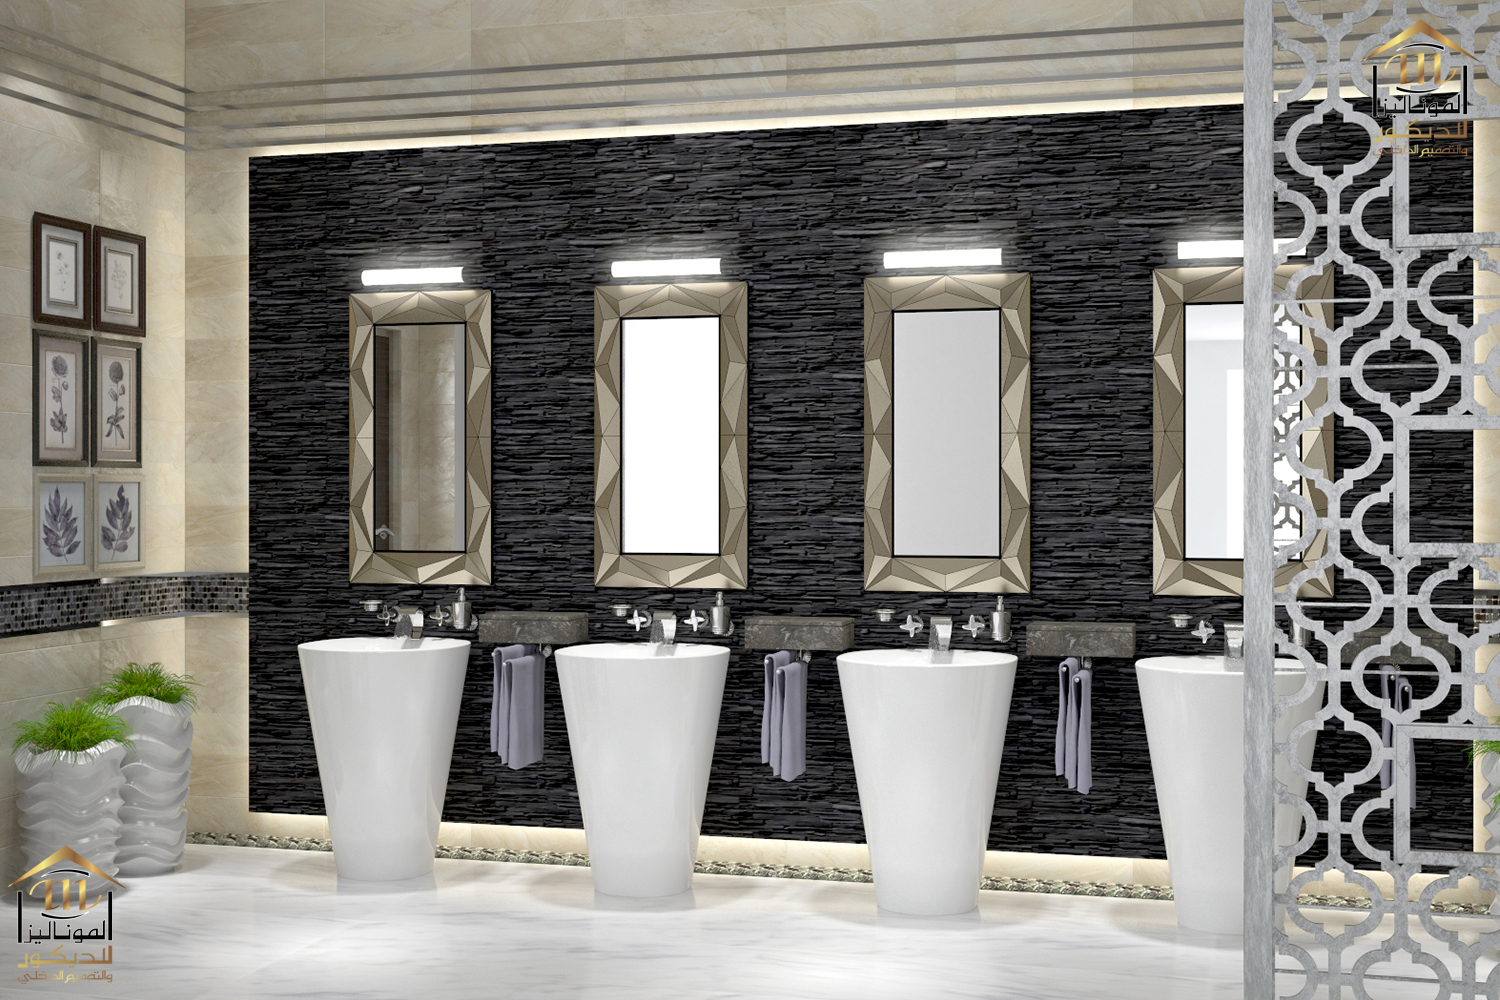 almonaliza group_decoration&interior design_bathrooms (20).jpg